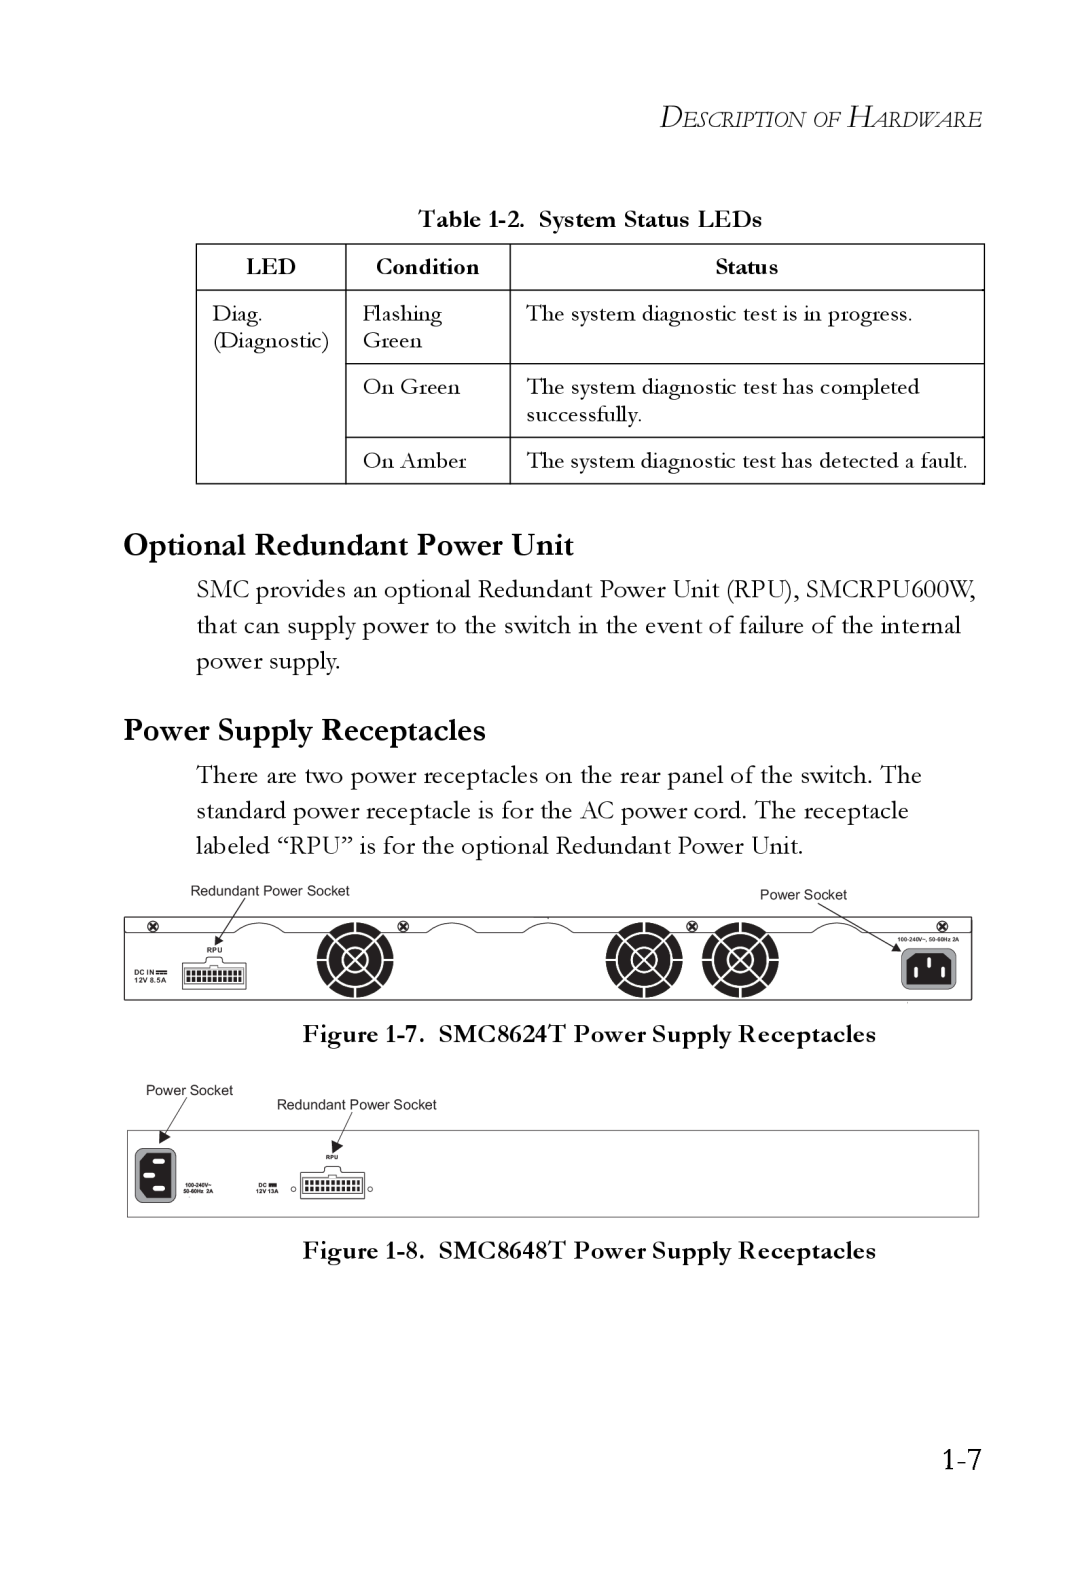 SMC Networks SMC8624T manual Optional Redundant Power Unit, Power Supply Receptacles, 2. System Status LEDs 